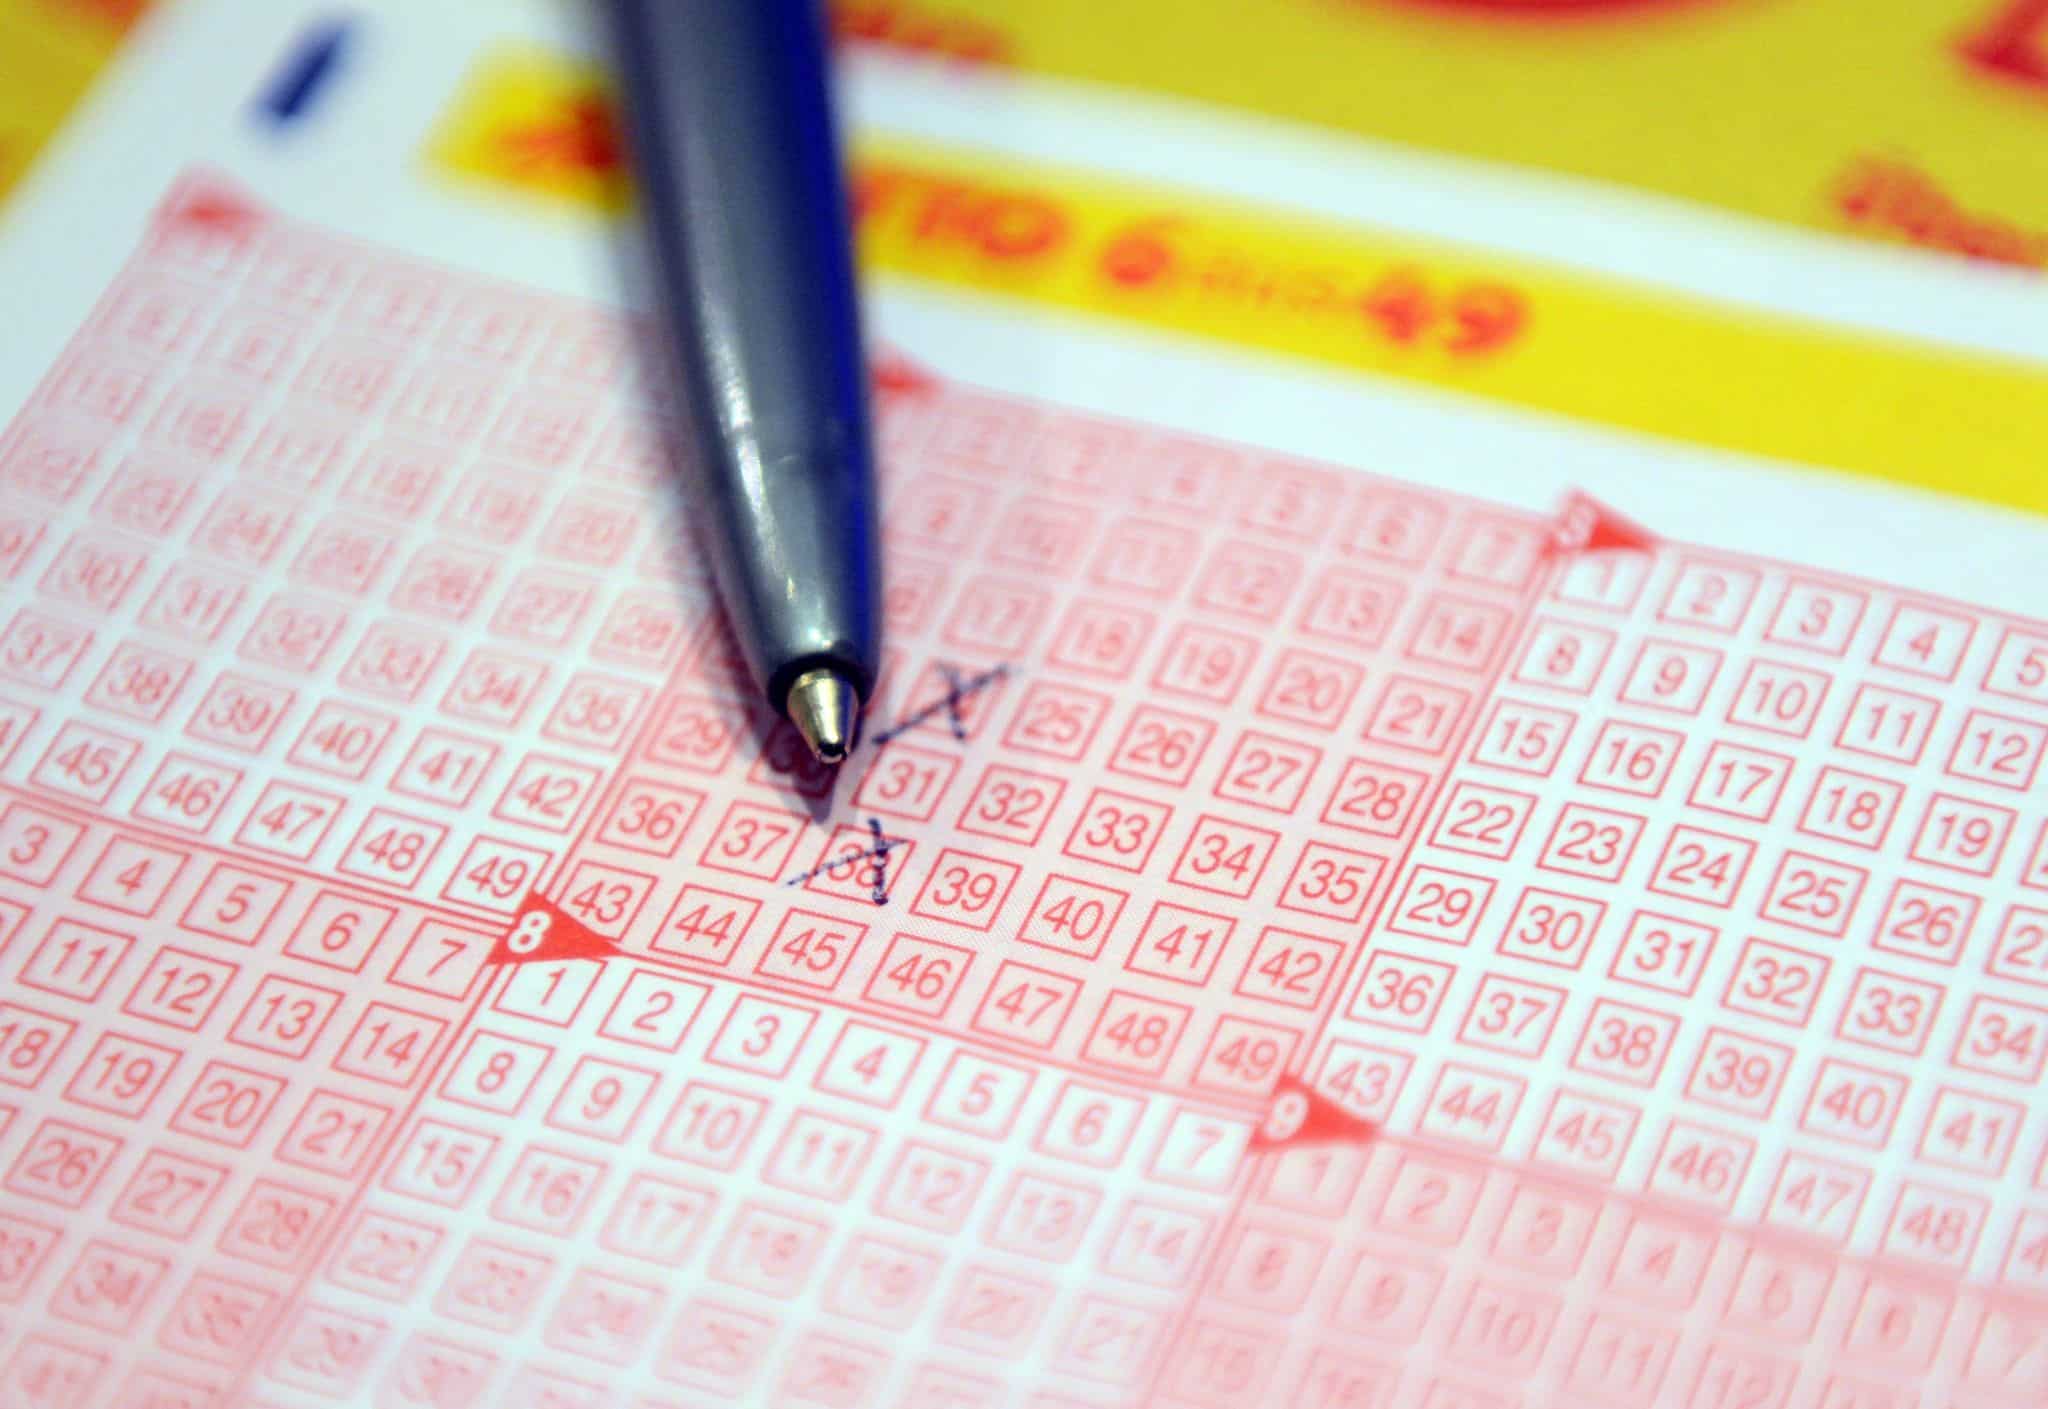 Lottospieler aufgepasst: Fake-Anwaltskanzlei verschickt Mahnschreiben